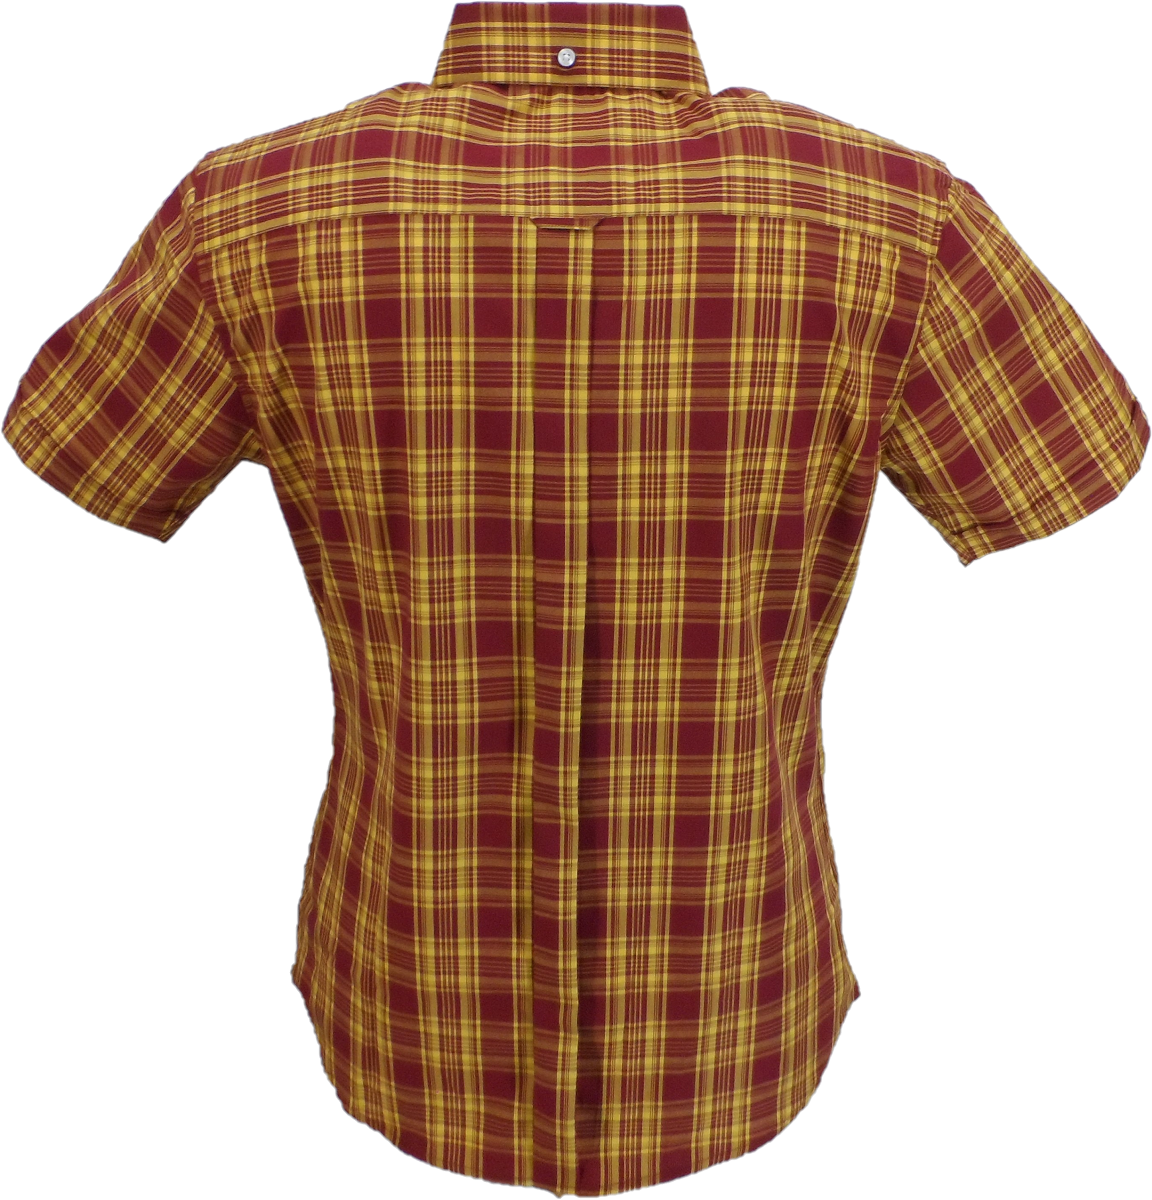 Relco Ladies Retro Burgundy & Mustard Check Button Down Short Sleeved Shirts